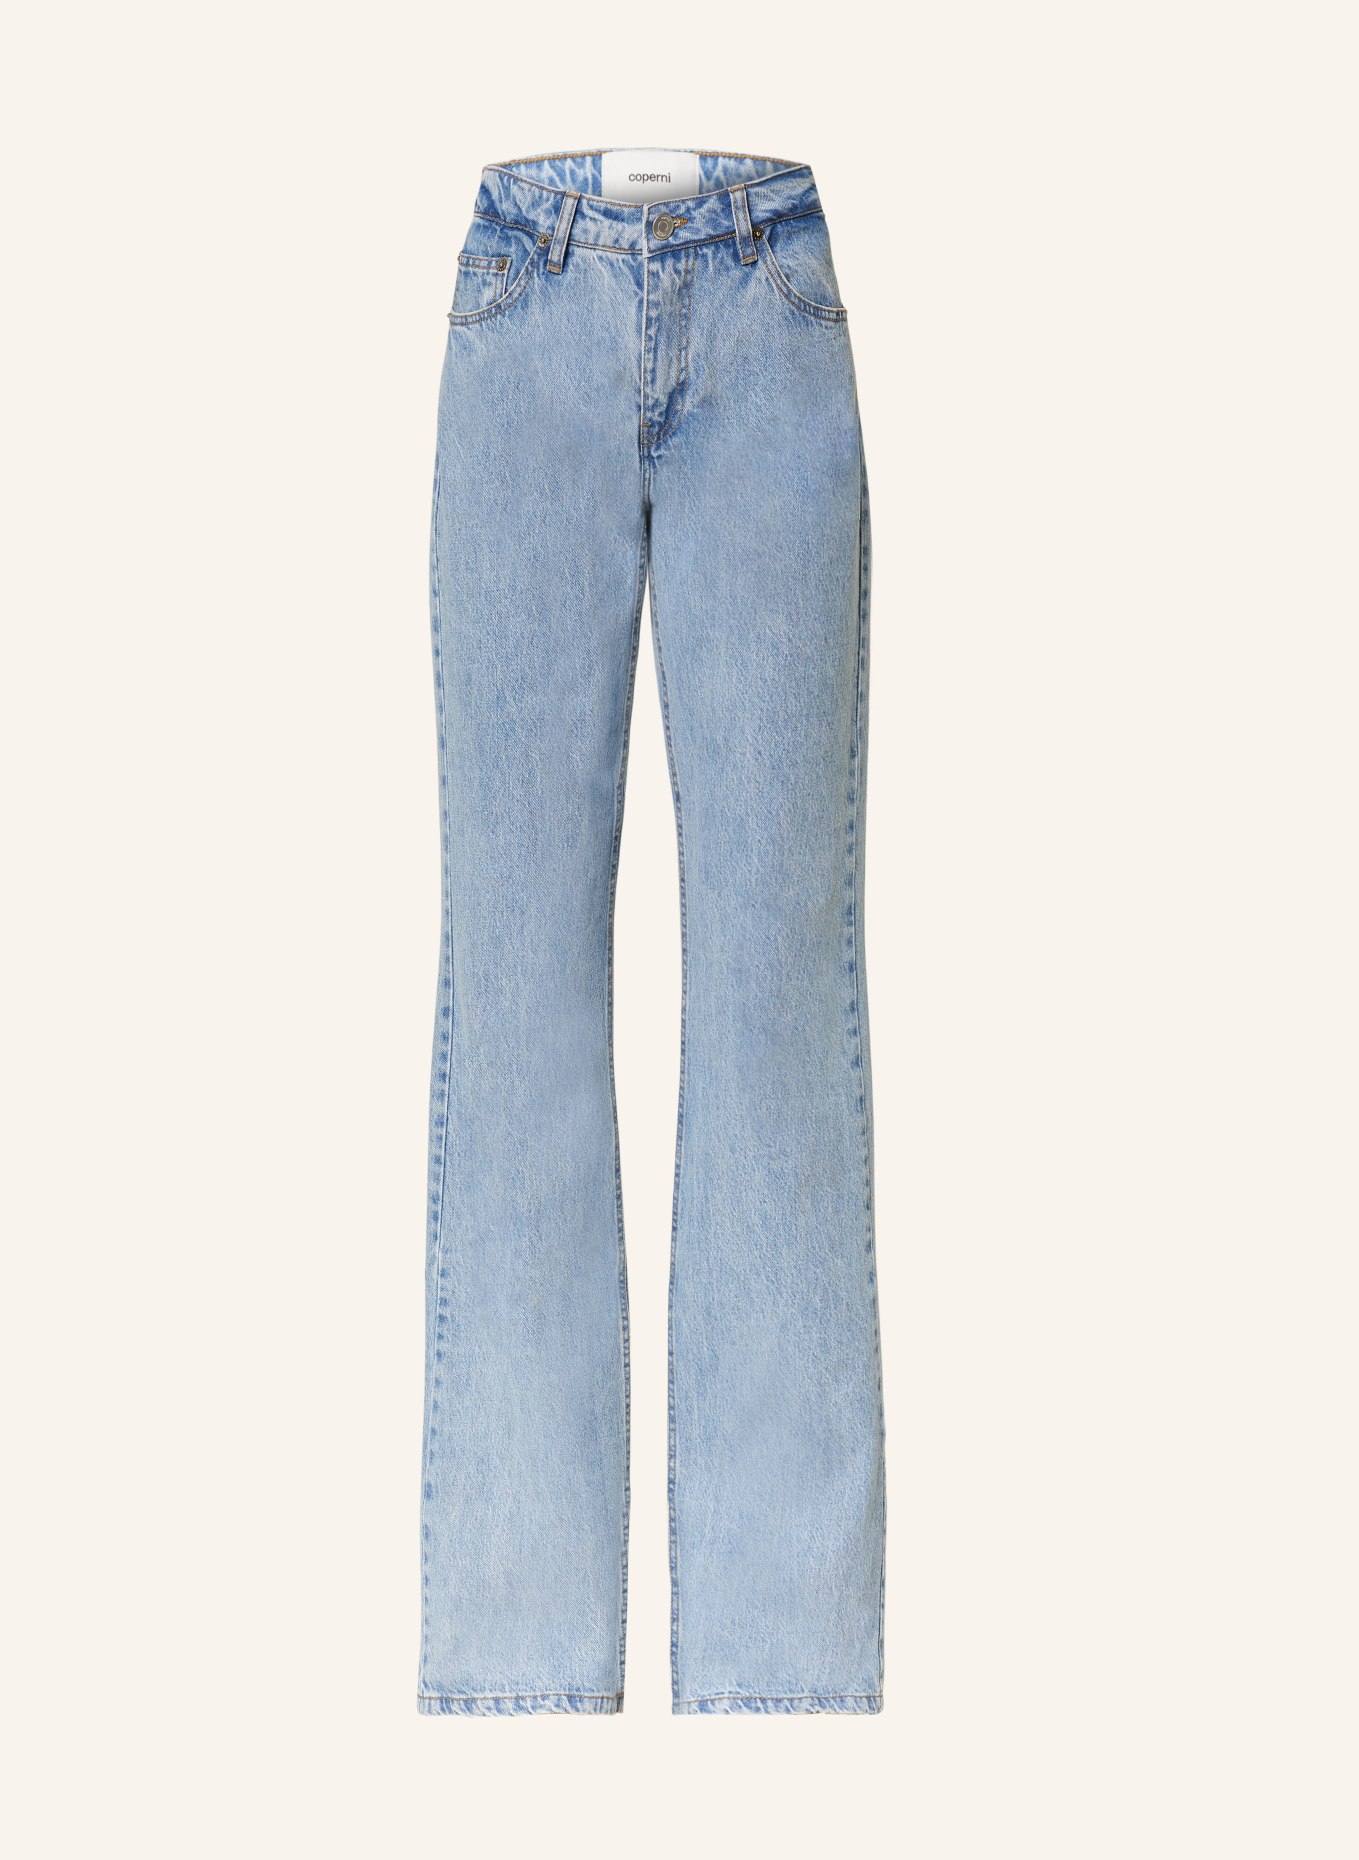 coperni Flared Jeans, Farbe: WASBLU WASHED BLUE (Bild 1)